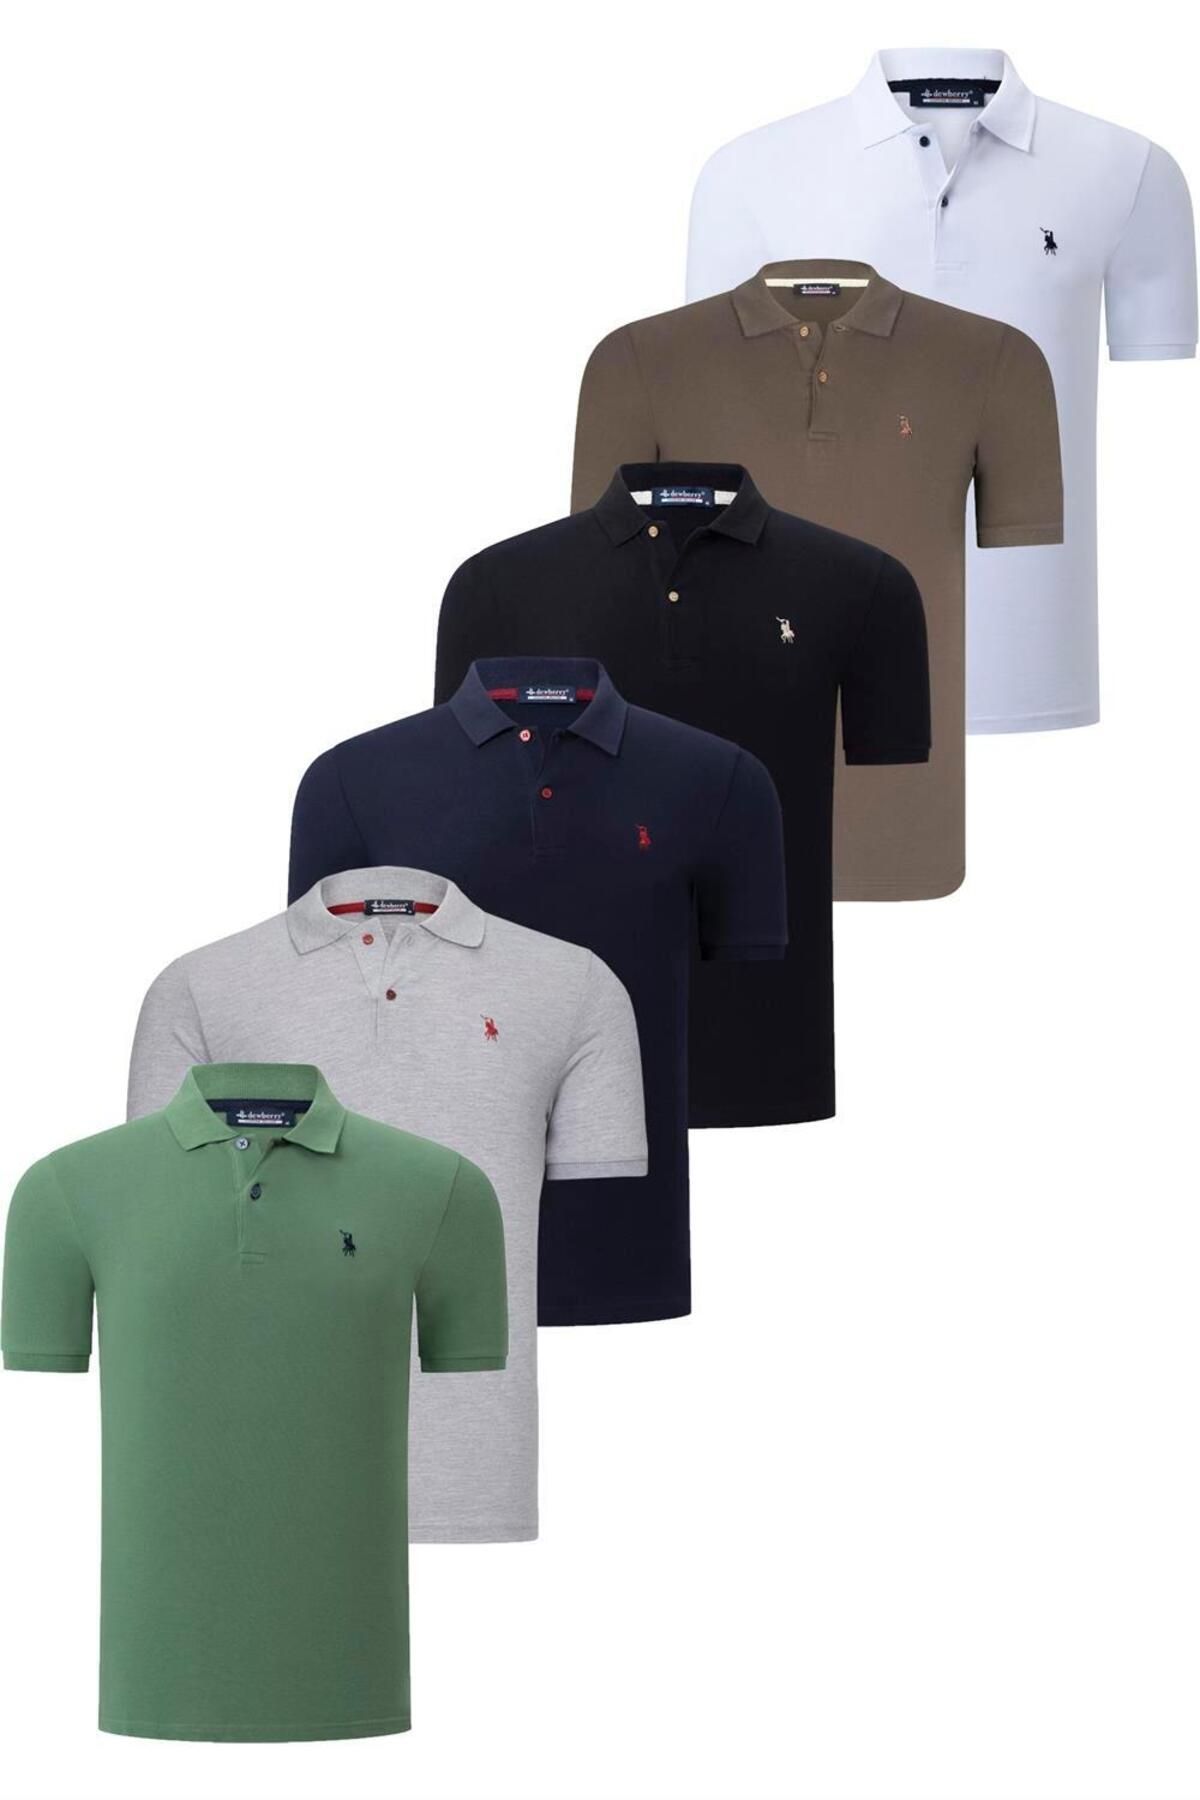 Dewberry ست شش تایی تی شرت مردانه دوبری T8561-مشکی-سفید-آبی تیره-سبز-خاکی روشن-خاکستری